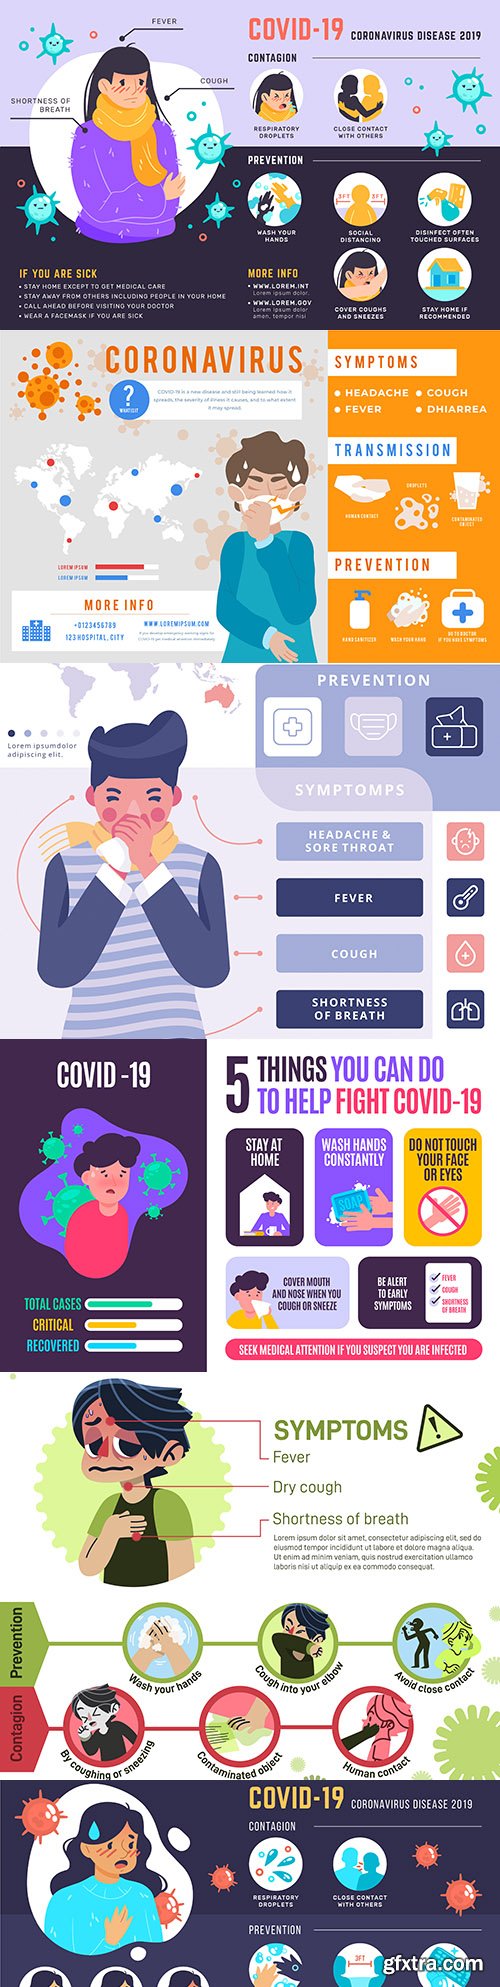 Coronavirus 2019 symptoms and prevention design infographics
